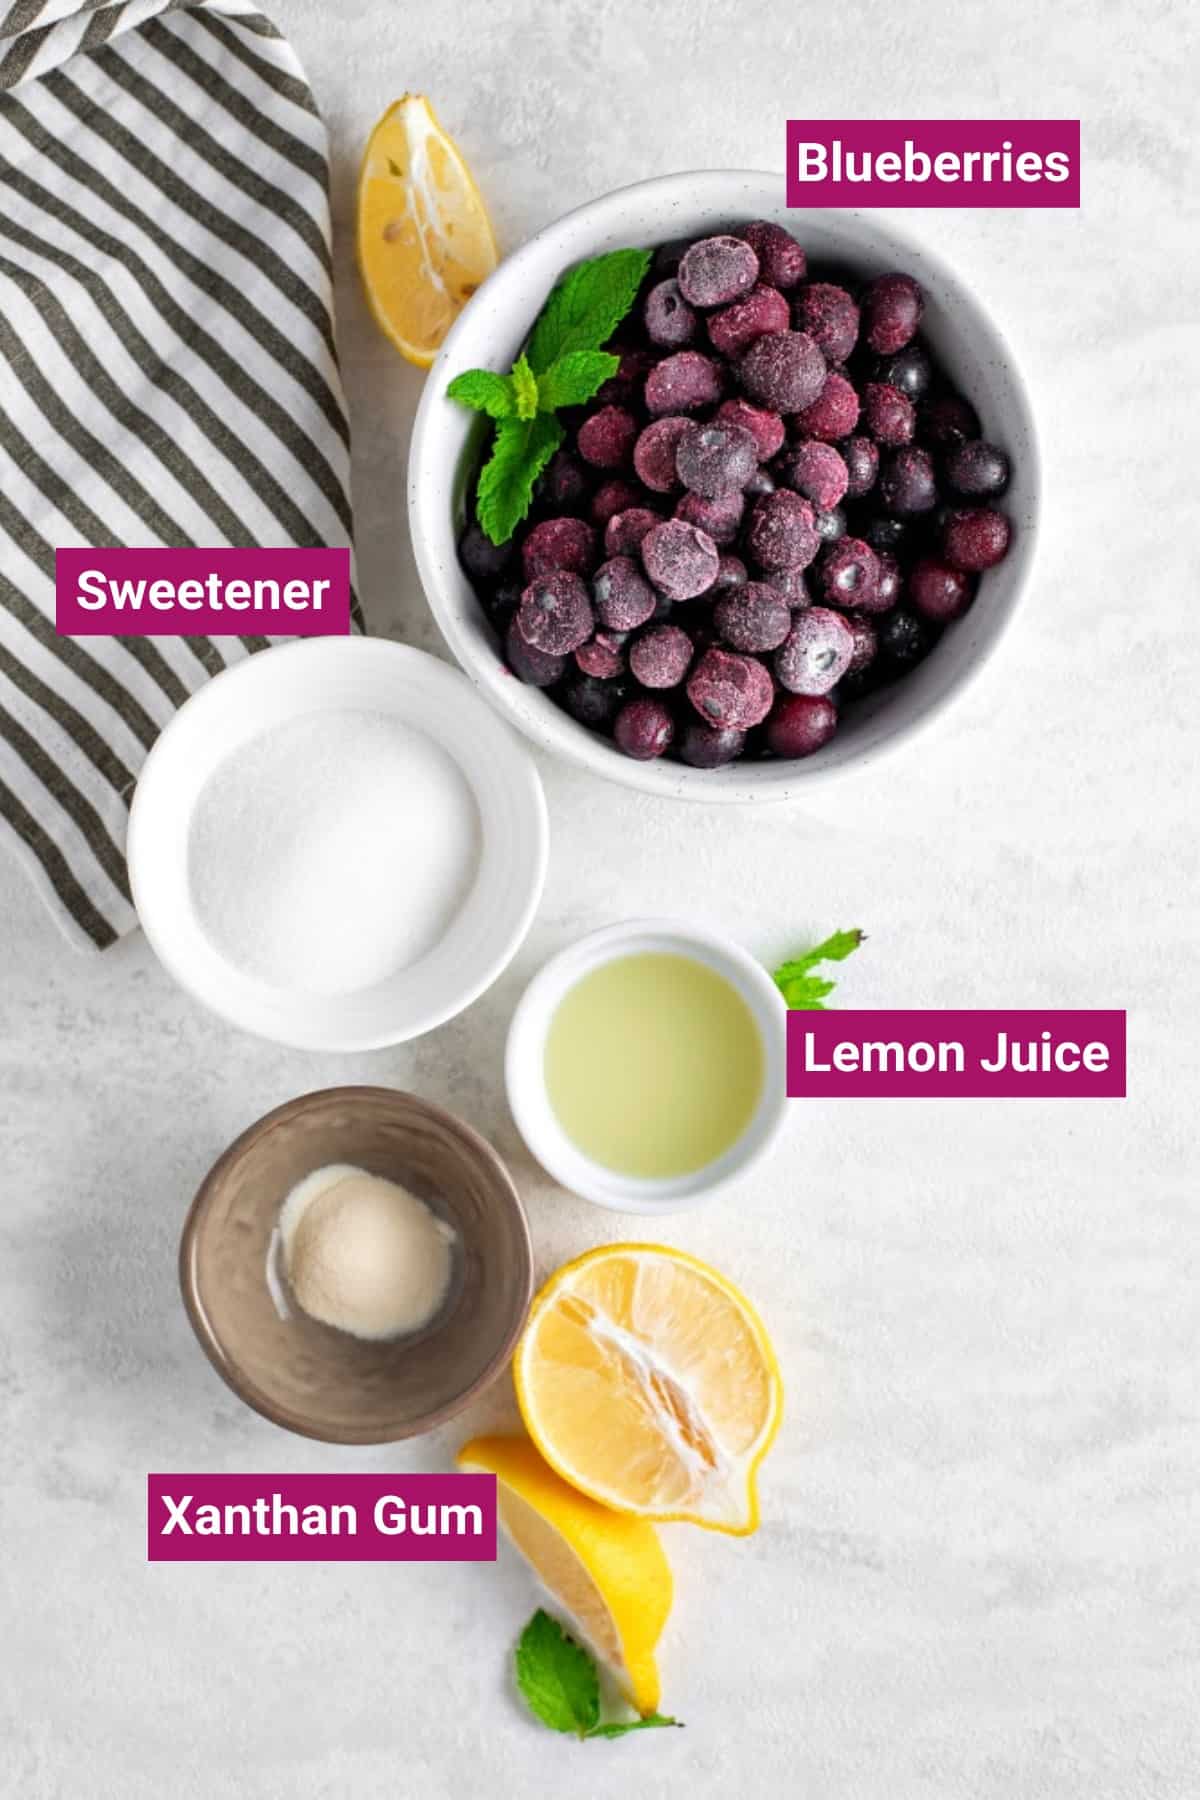 ingredients to make keto blueberry sauce in separate bowls: frozen blueberries, keto sweetener, lemon juice, and xanthum gum